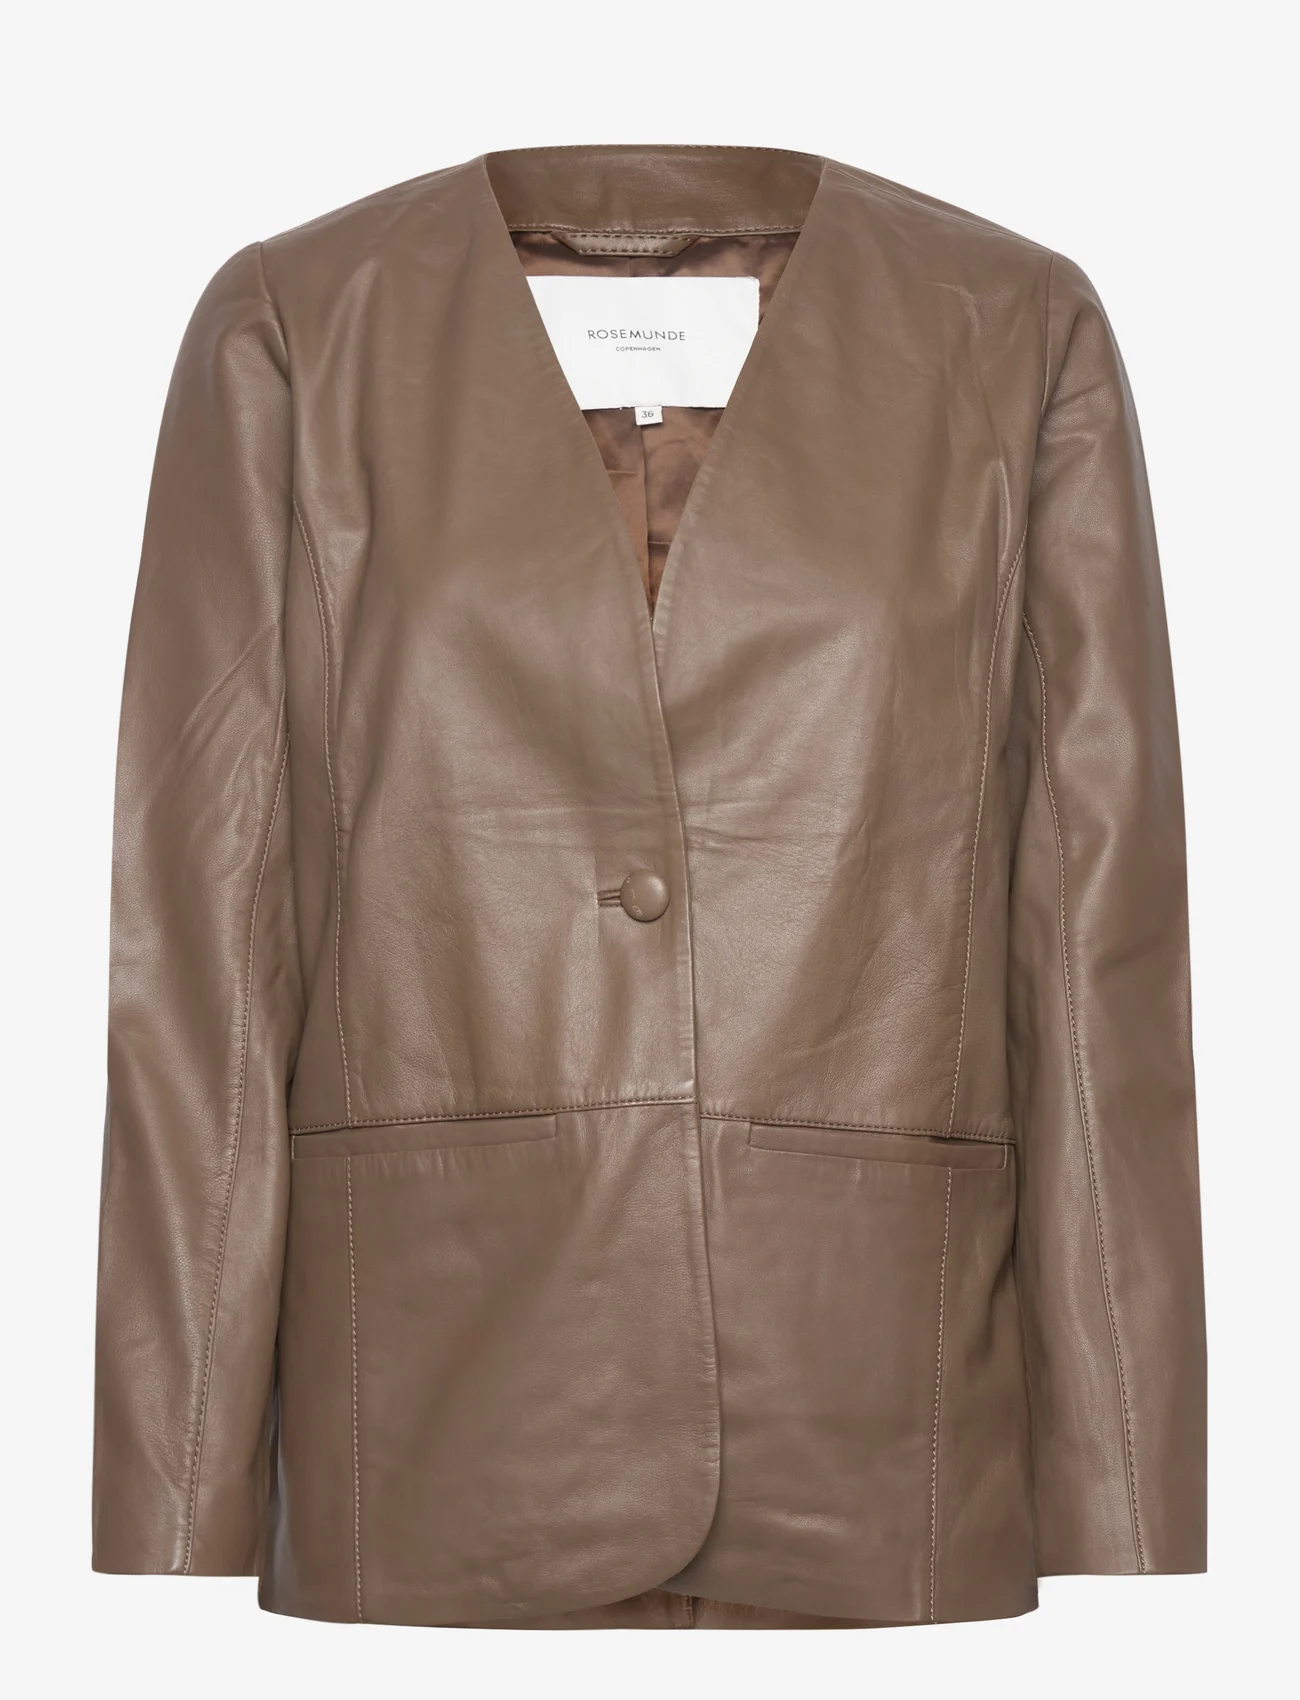 Rosemunde - Leather jacket - dark portobello brown - 0